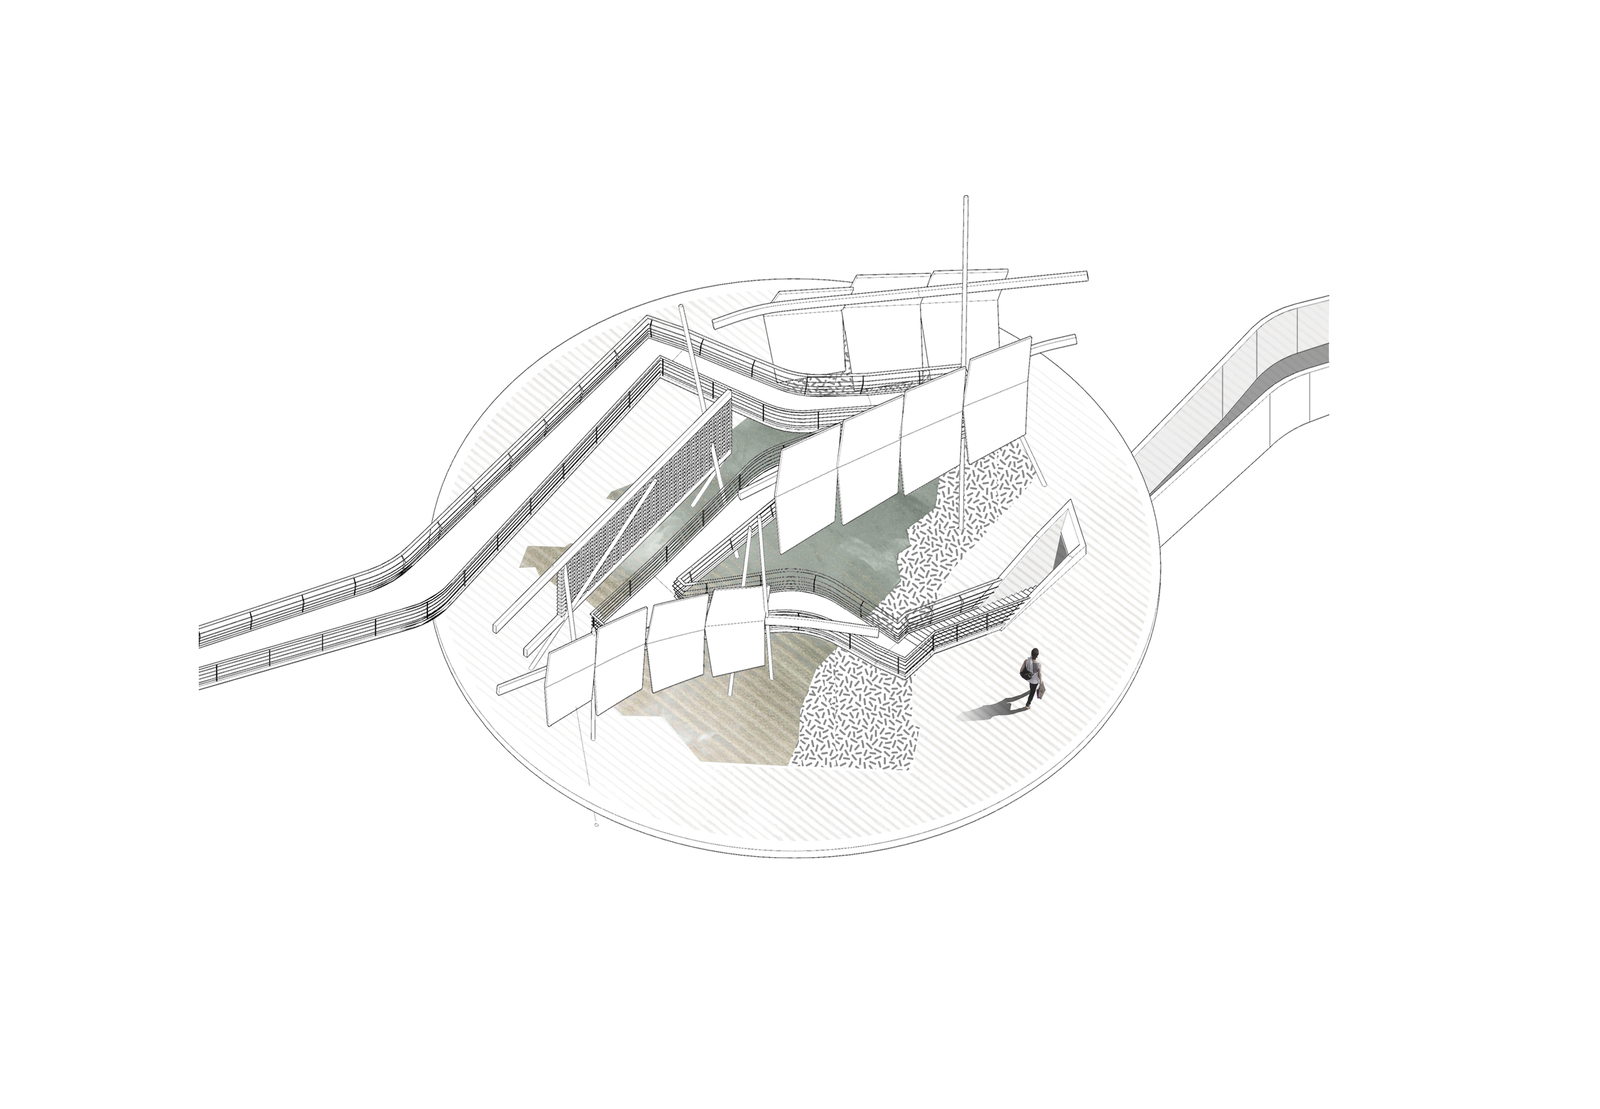 Archisearch Ανα-καδράροντας το αστικό τοπίο: ο Δημήτρης Στεφανάκης απέσπασε το 2ο βραβείο στον Φοιτητικό Αρχιτεκτονικό Διαγωνισμό Ιδεών ΚΟΜΒΙΚΕΣ ΘΕΣΕΙΣ του Πανεπιστημίου Θεσσαλίας